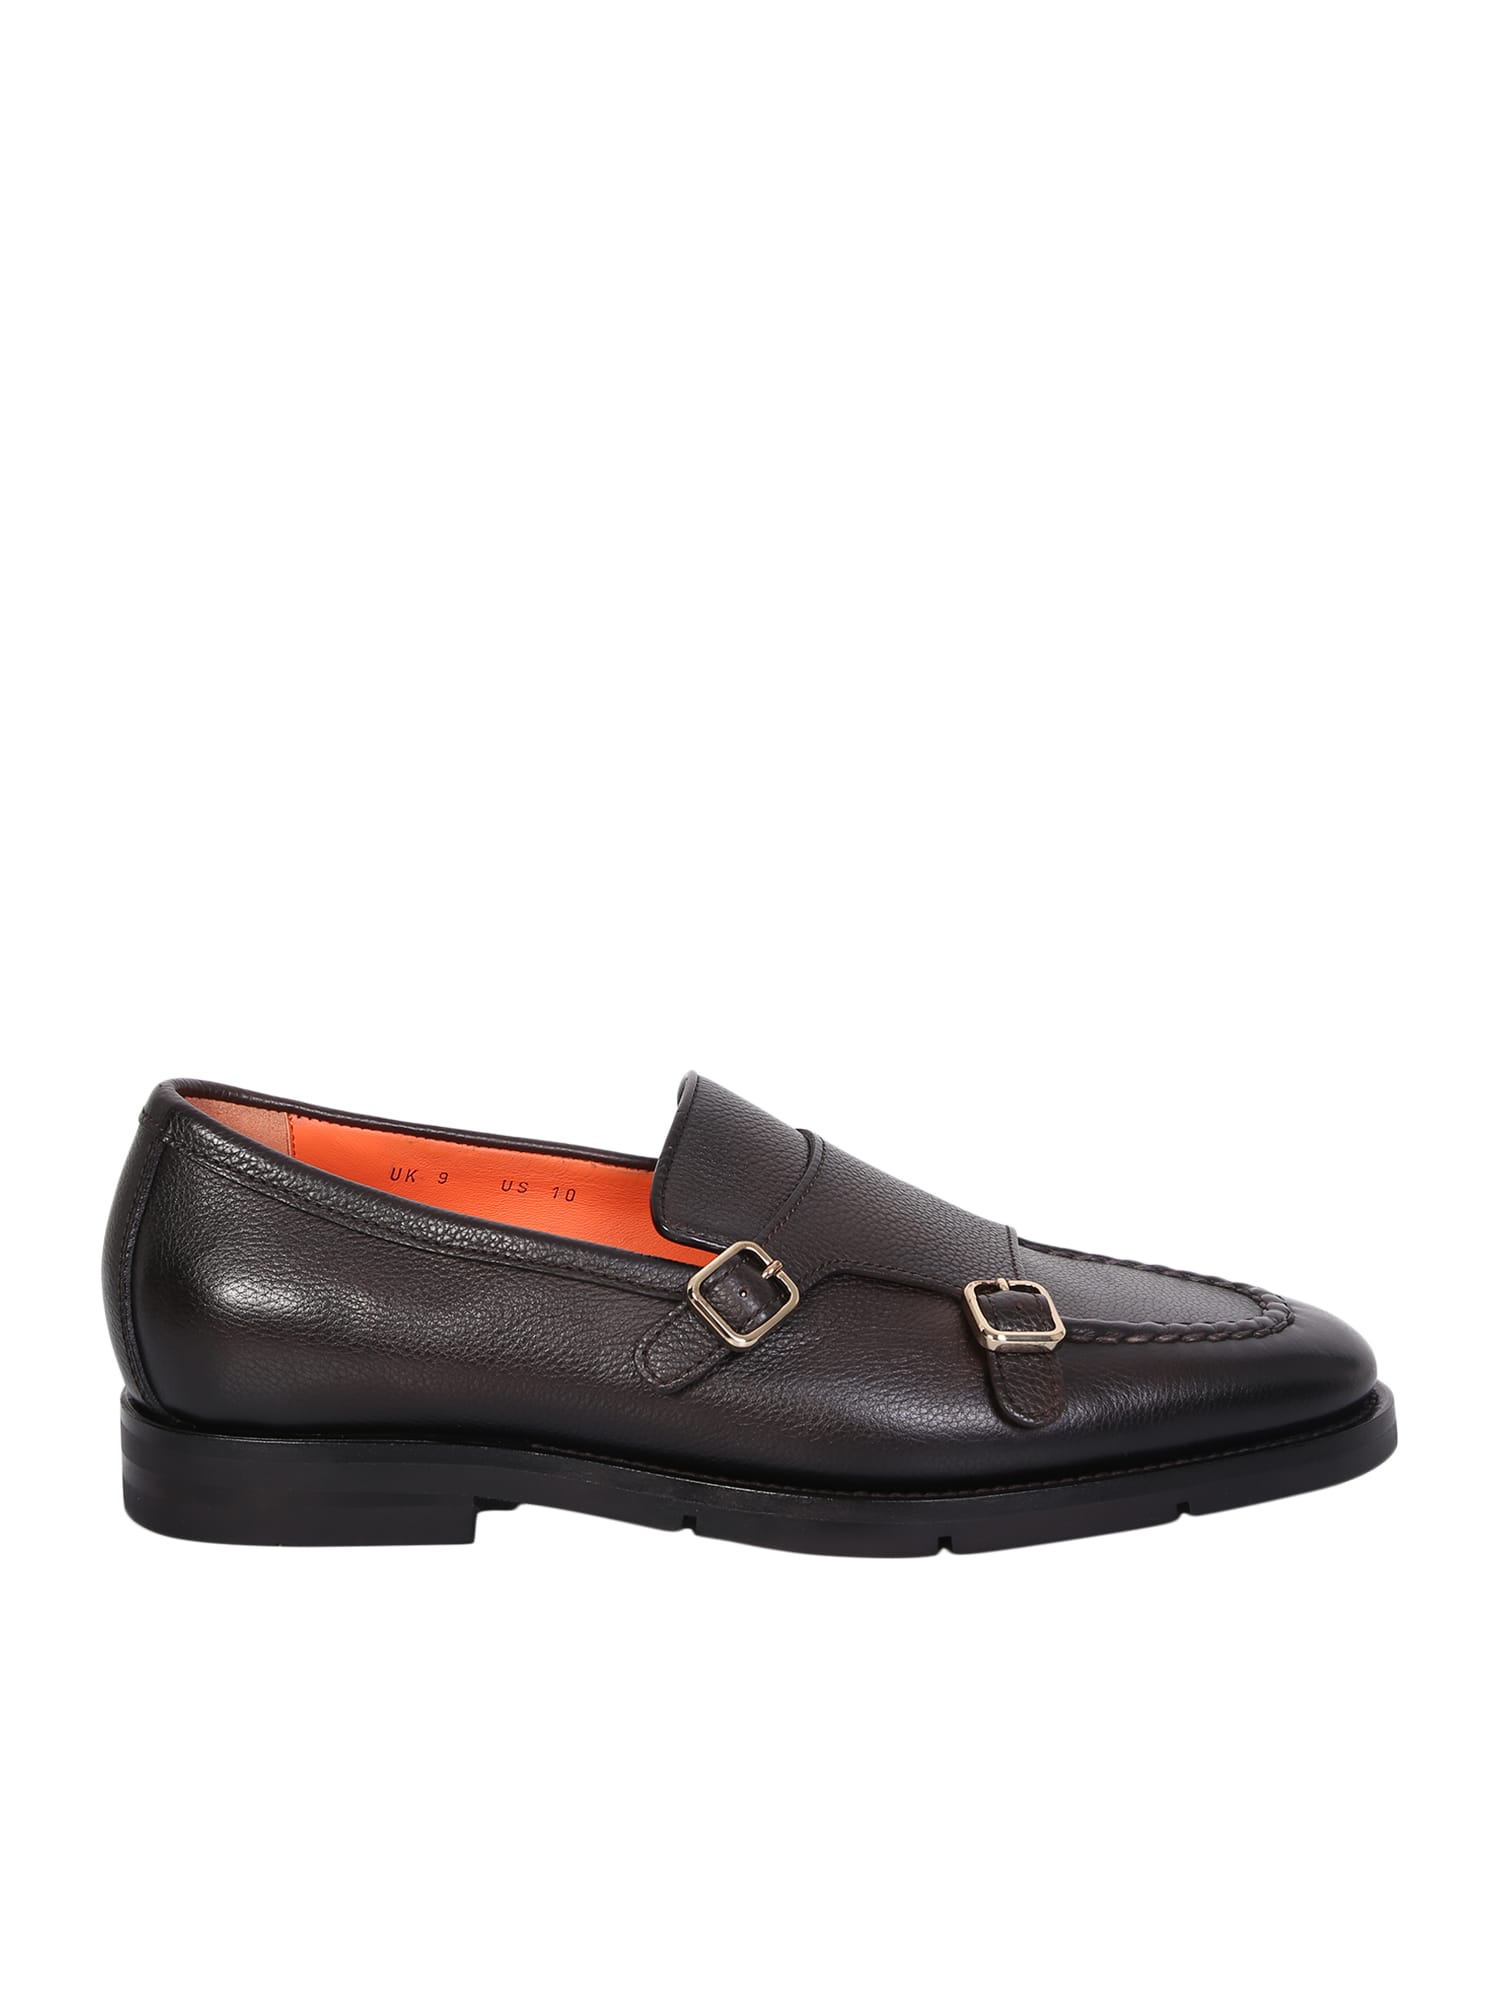 Santoni Double Strap Monk Shoes Brown